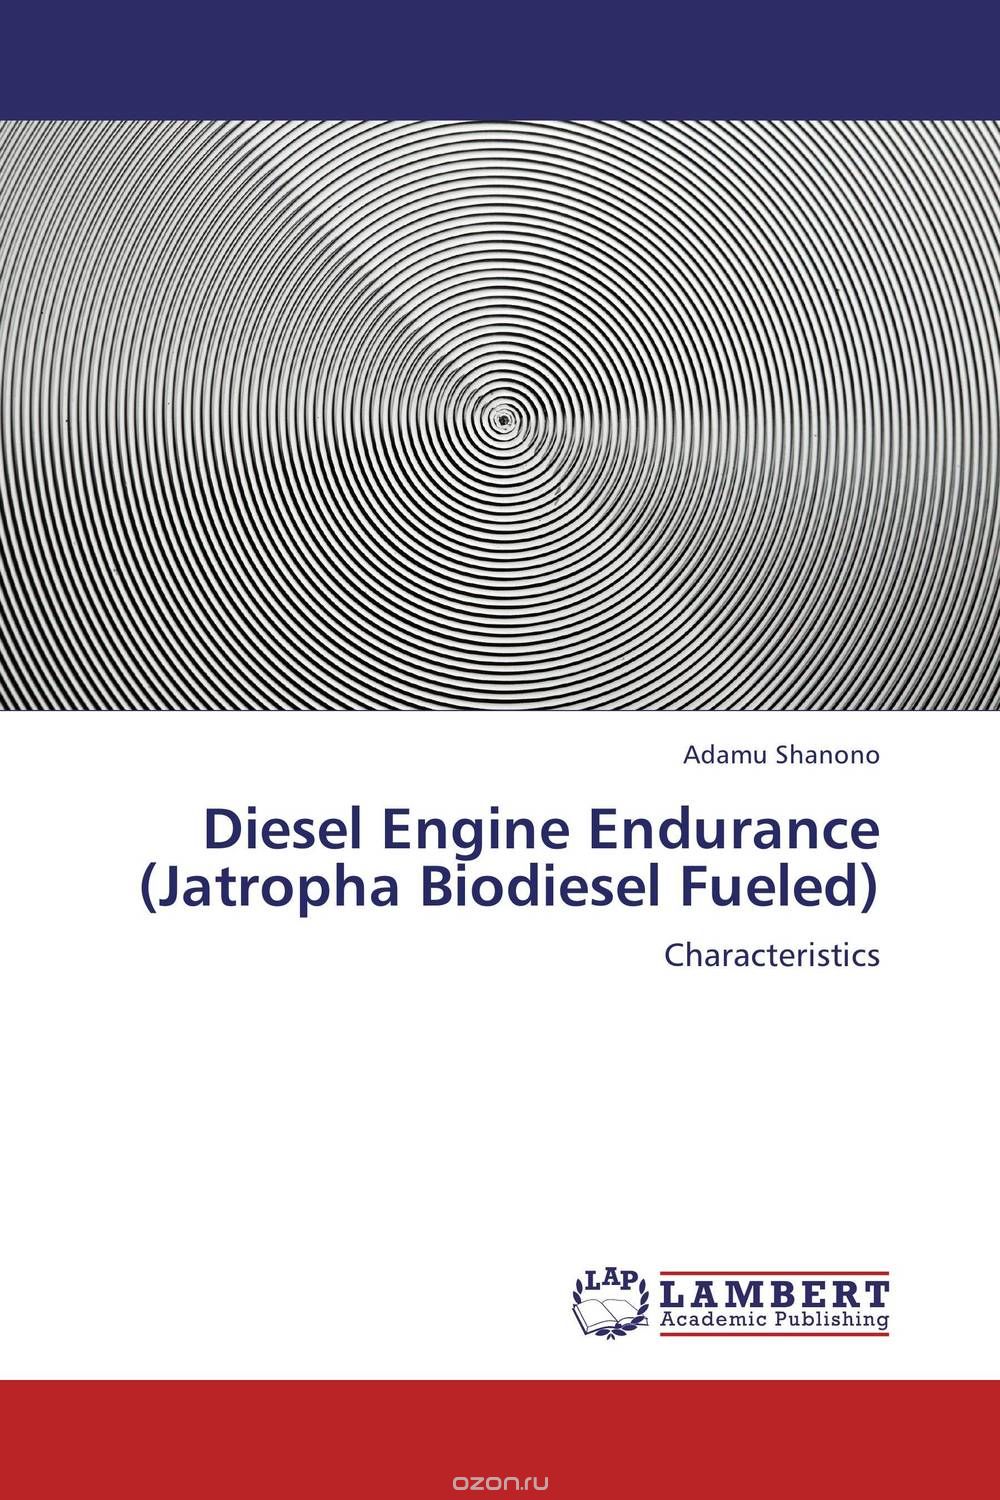 Скачать книгу "Diesel Engine Endurance (Jatropha Biodiesel Fueled)"